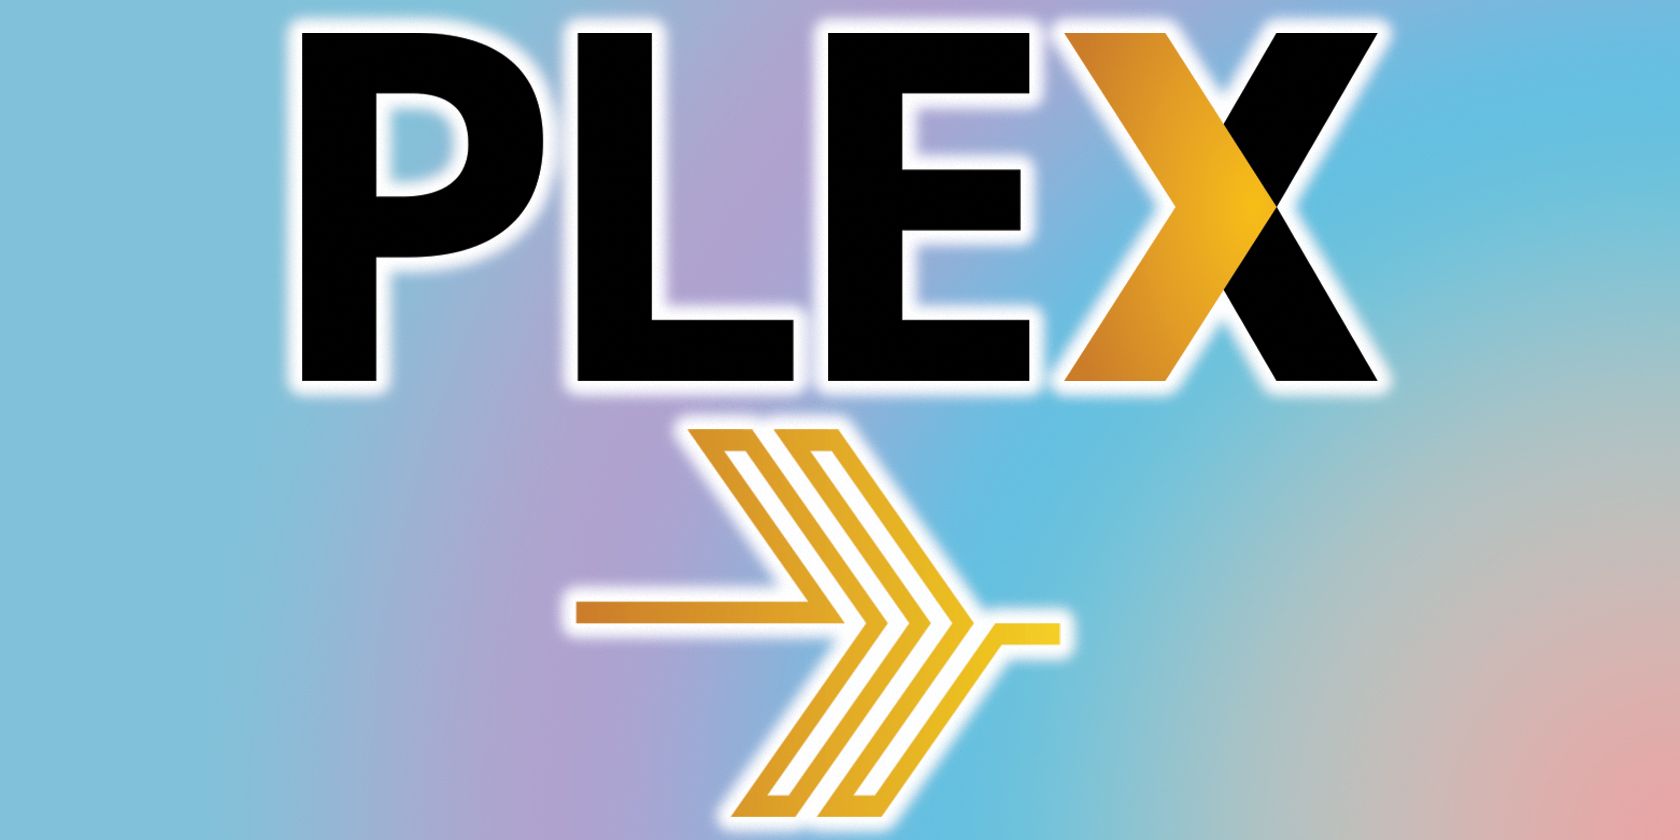 plex and plexamp logo